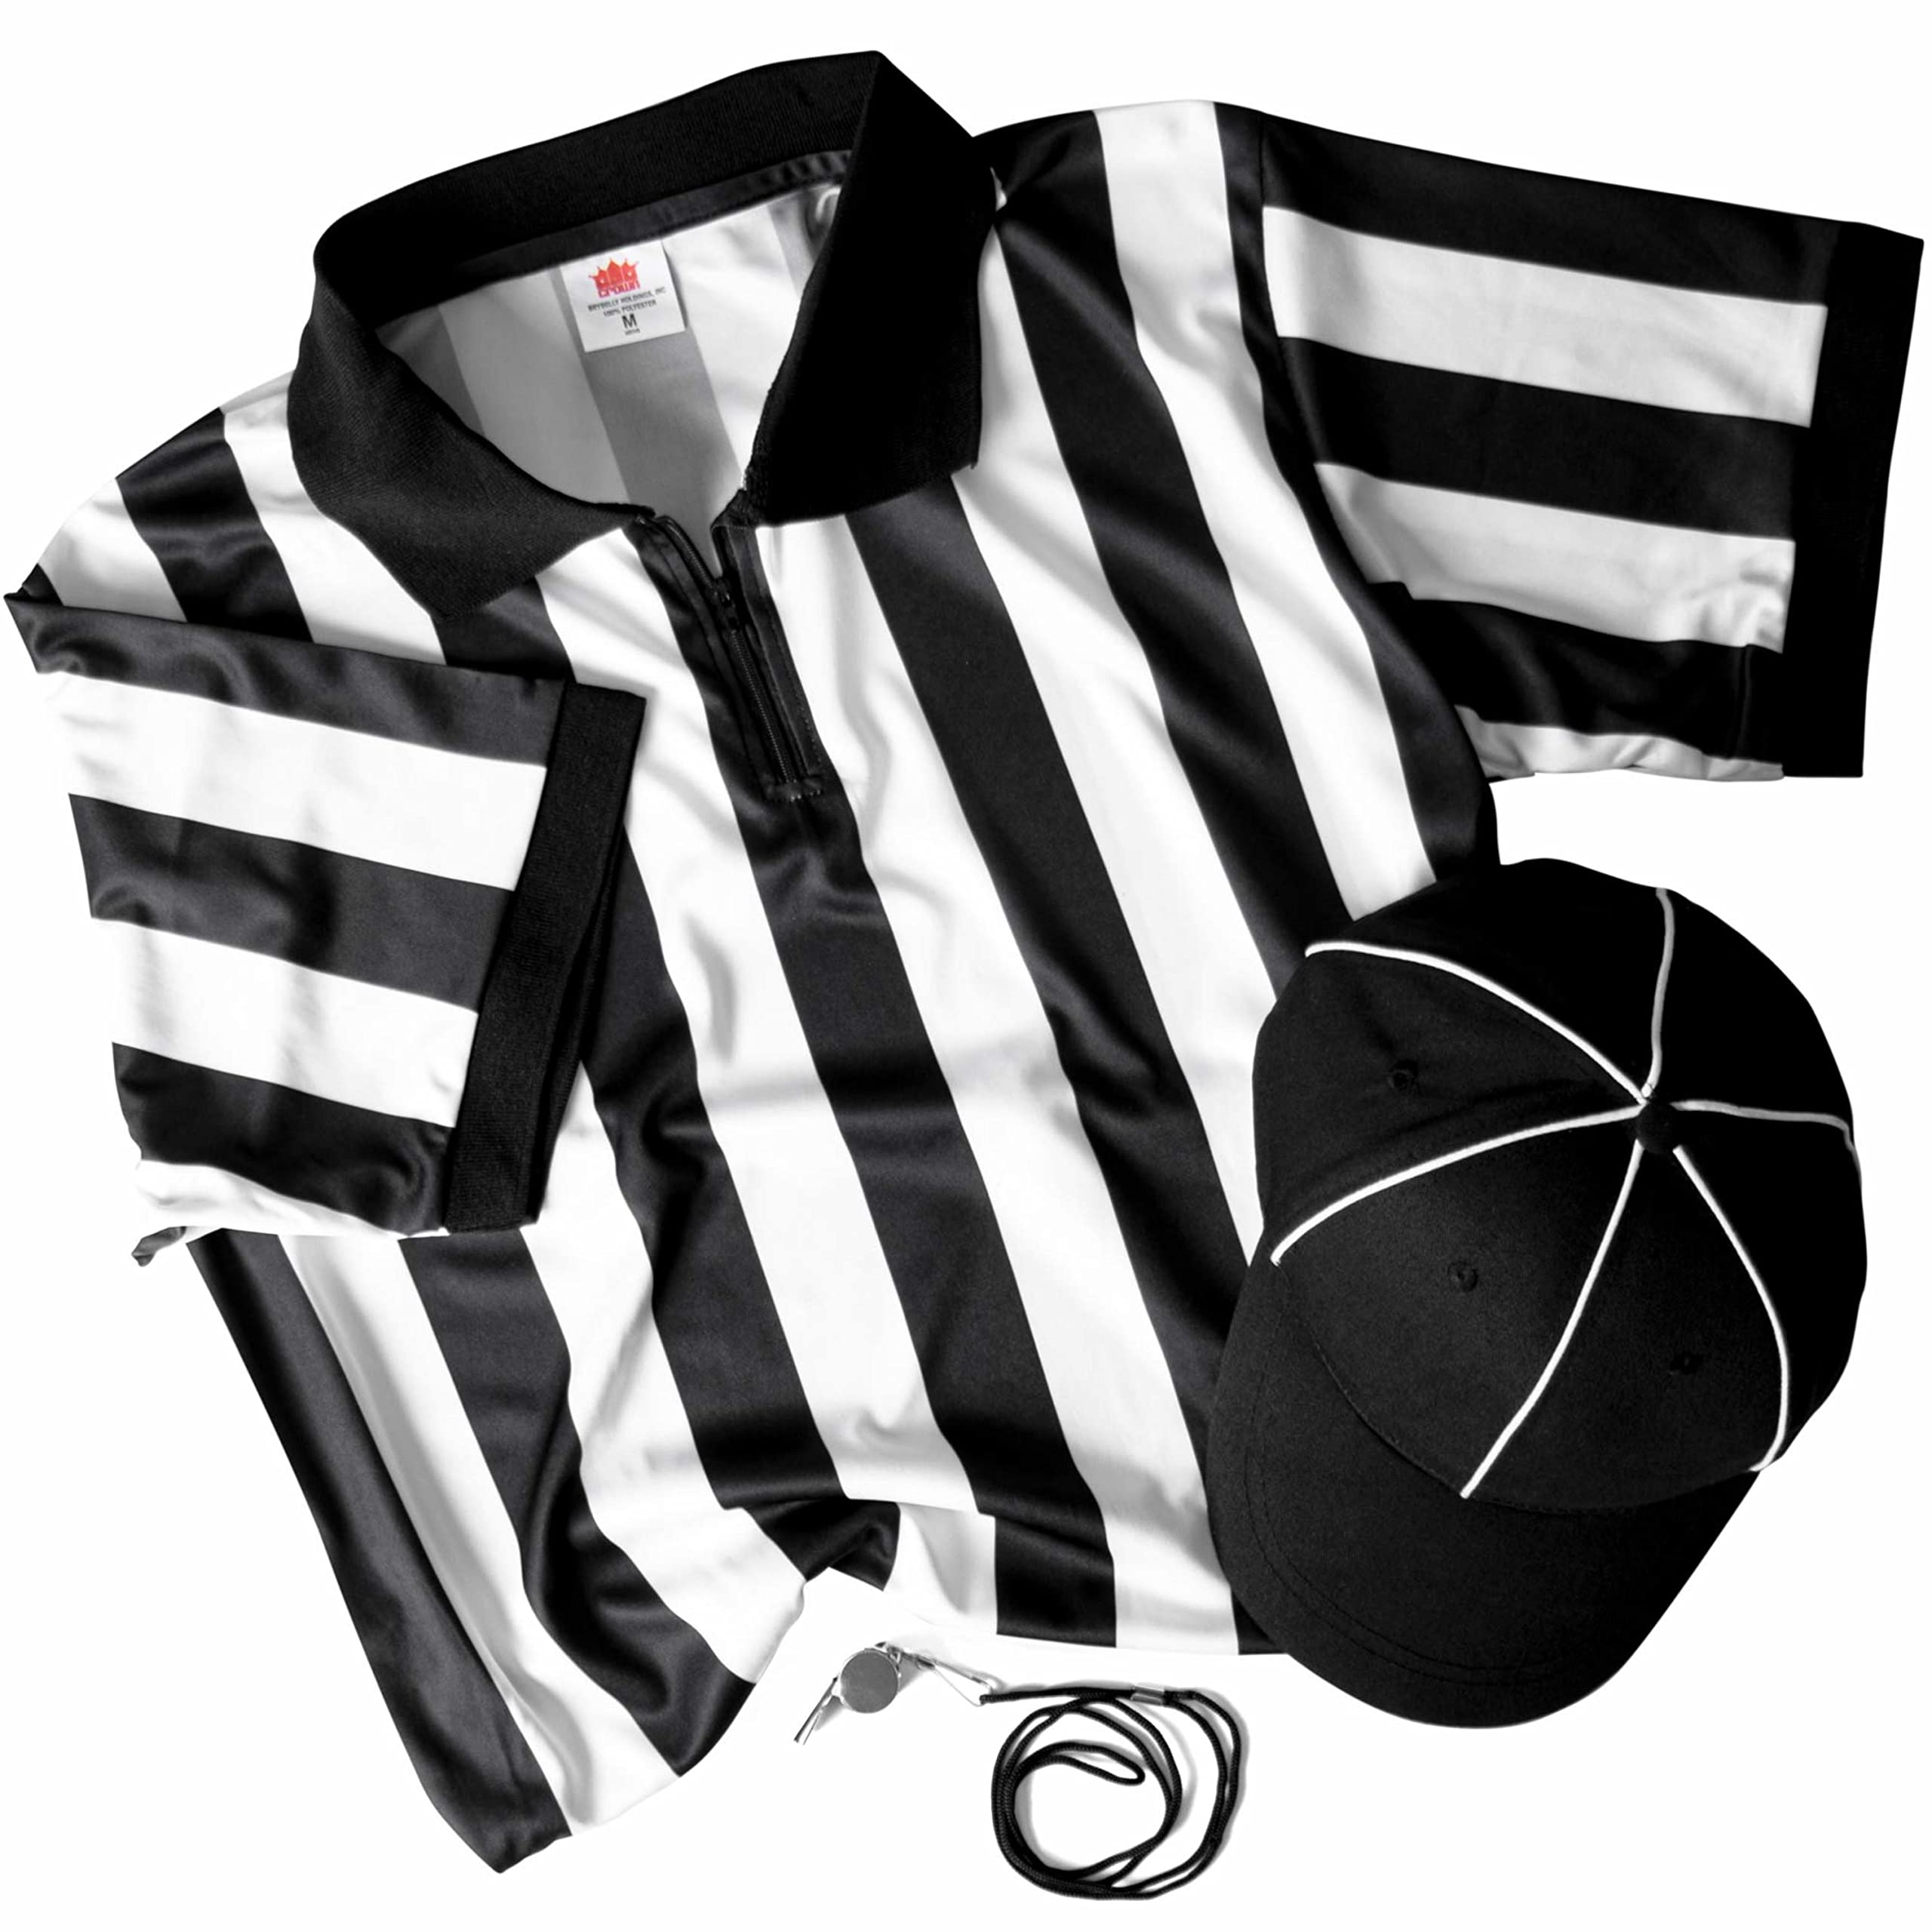  Crown Sport Goods, Men's Official Black & White Striped Referee/Umpire  Jersey, Pro-Style Uniform